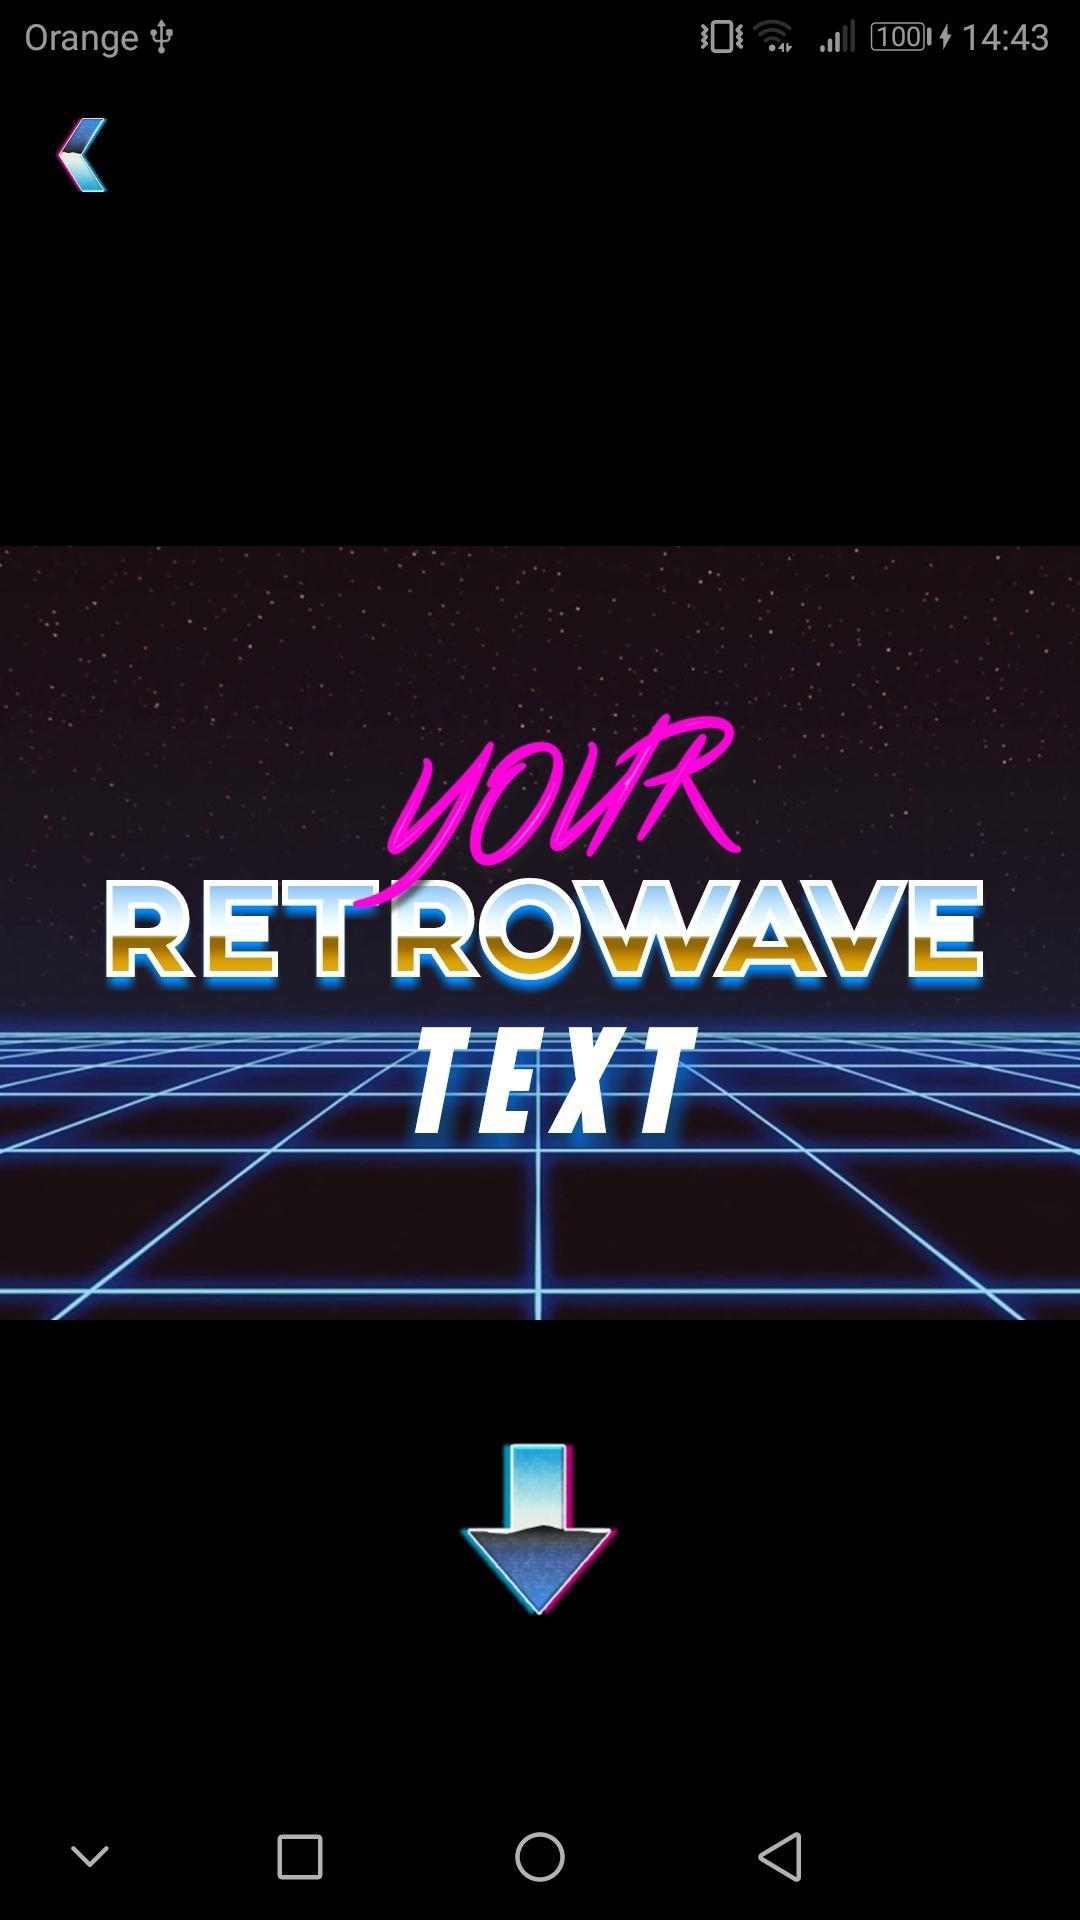 retro text generator – 80s retro font generator – Crpodt